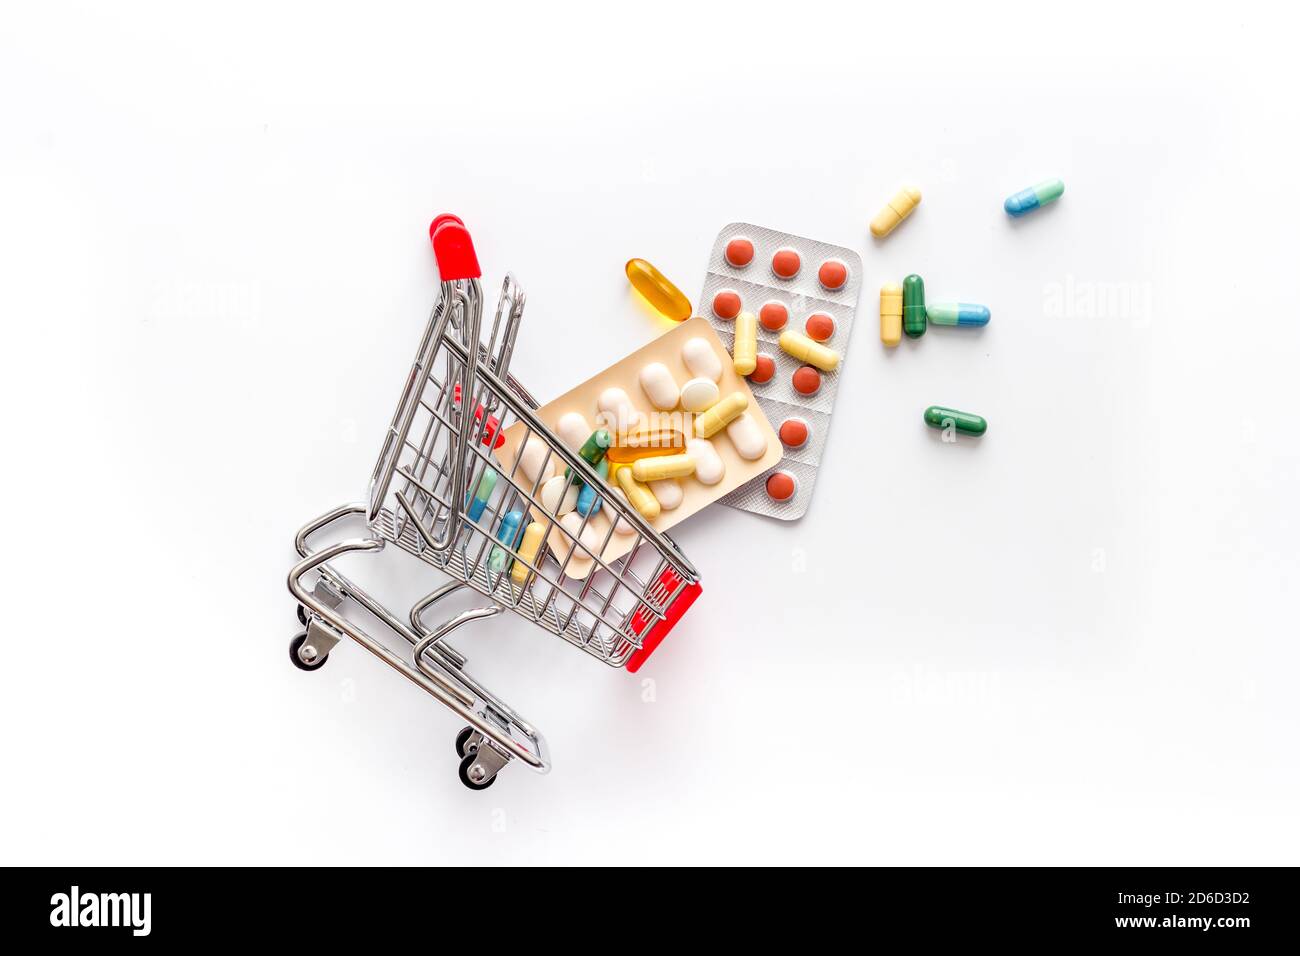 https://c8.alamy.com/comp/2D6D3D2/online-pharmacy-shopping-concept-basket-with-pills-and-medicine-2D6D3D2.jpg